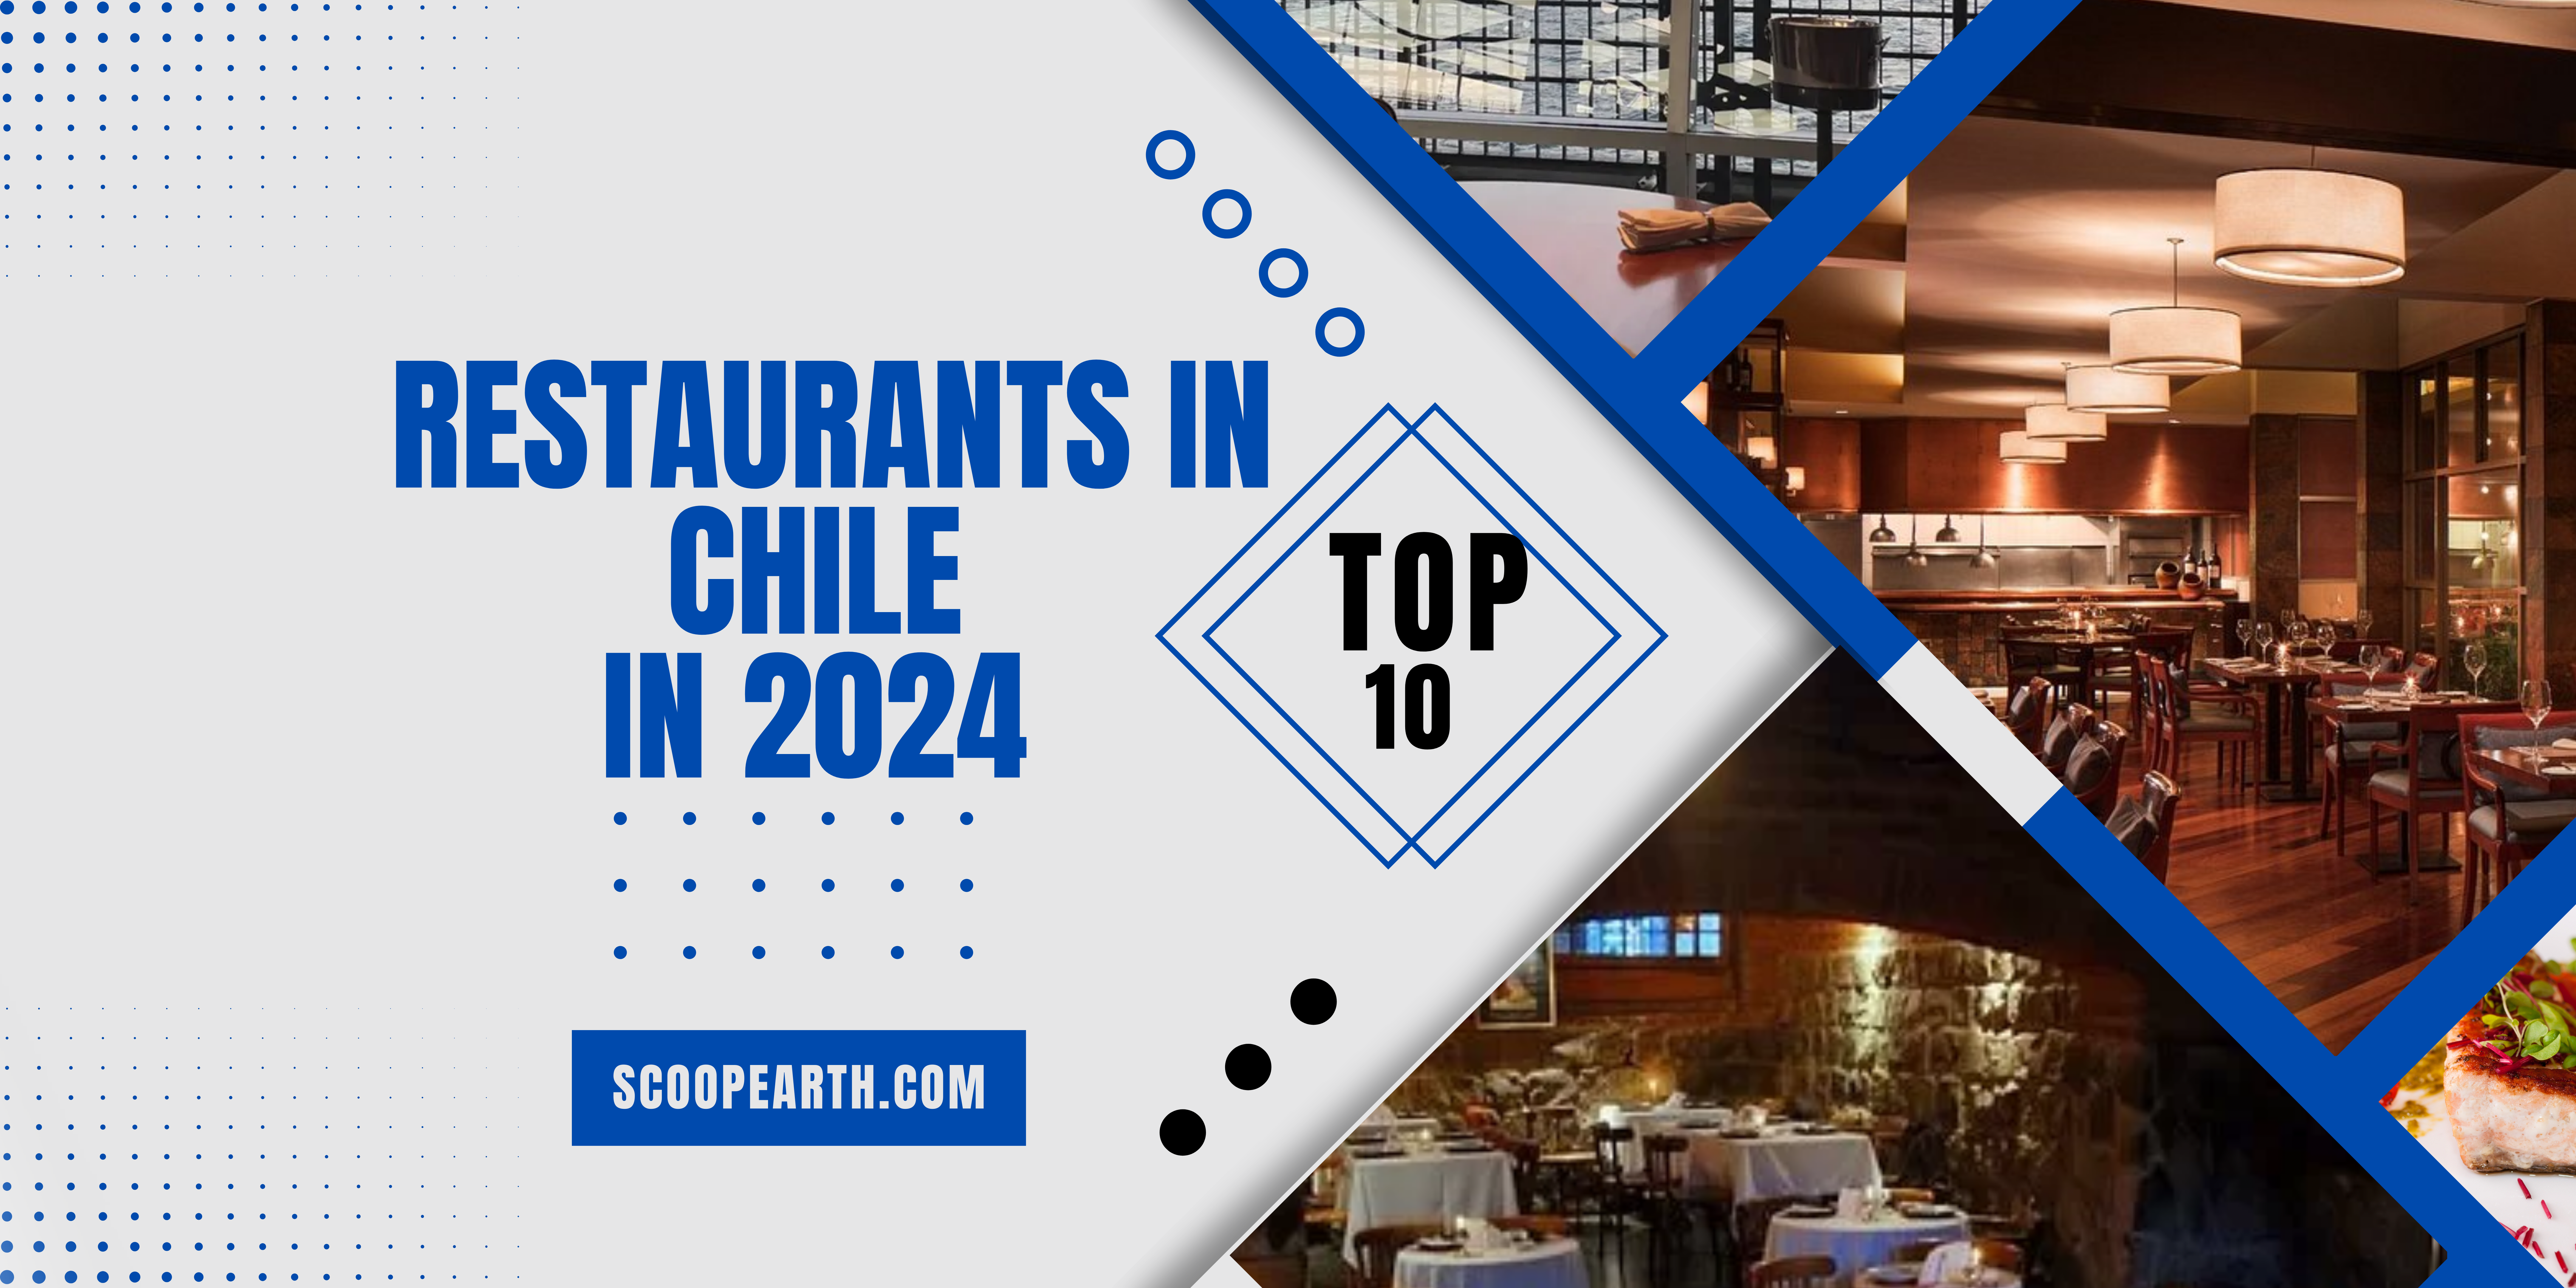 Top 10 Restaurants in Chile in 2024